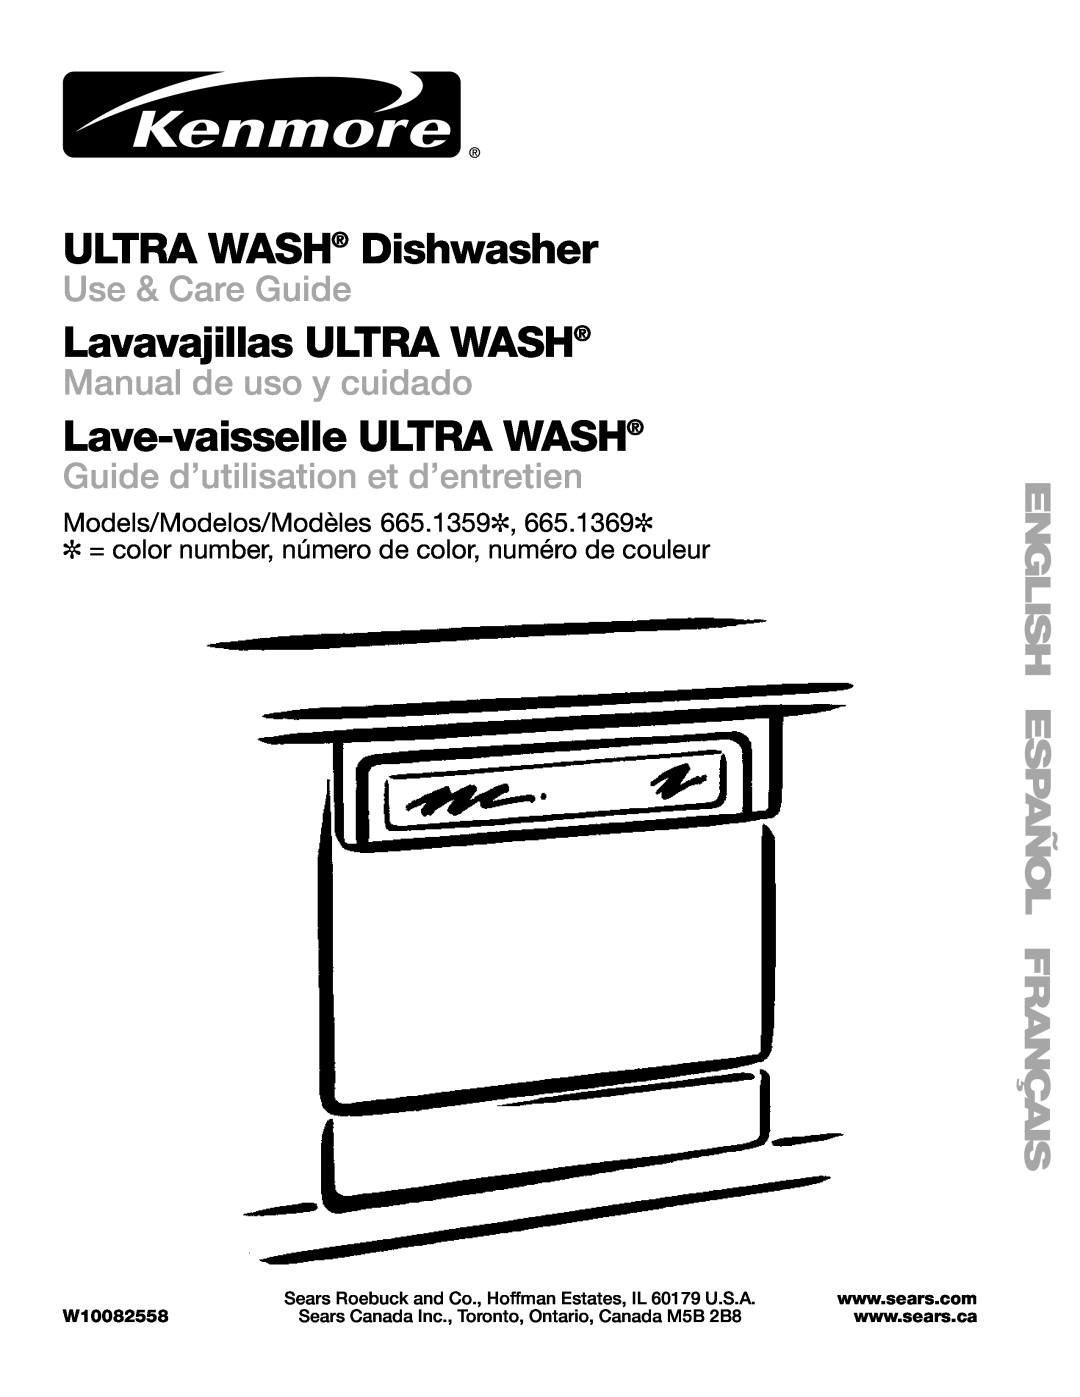 Sears 665.1369, 665.1359 manual W10082558, ULTRA WASH Dishwasher, Lavavajillas ULTRA WASH, Lave-vaisselleULTRA WASH 